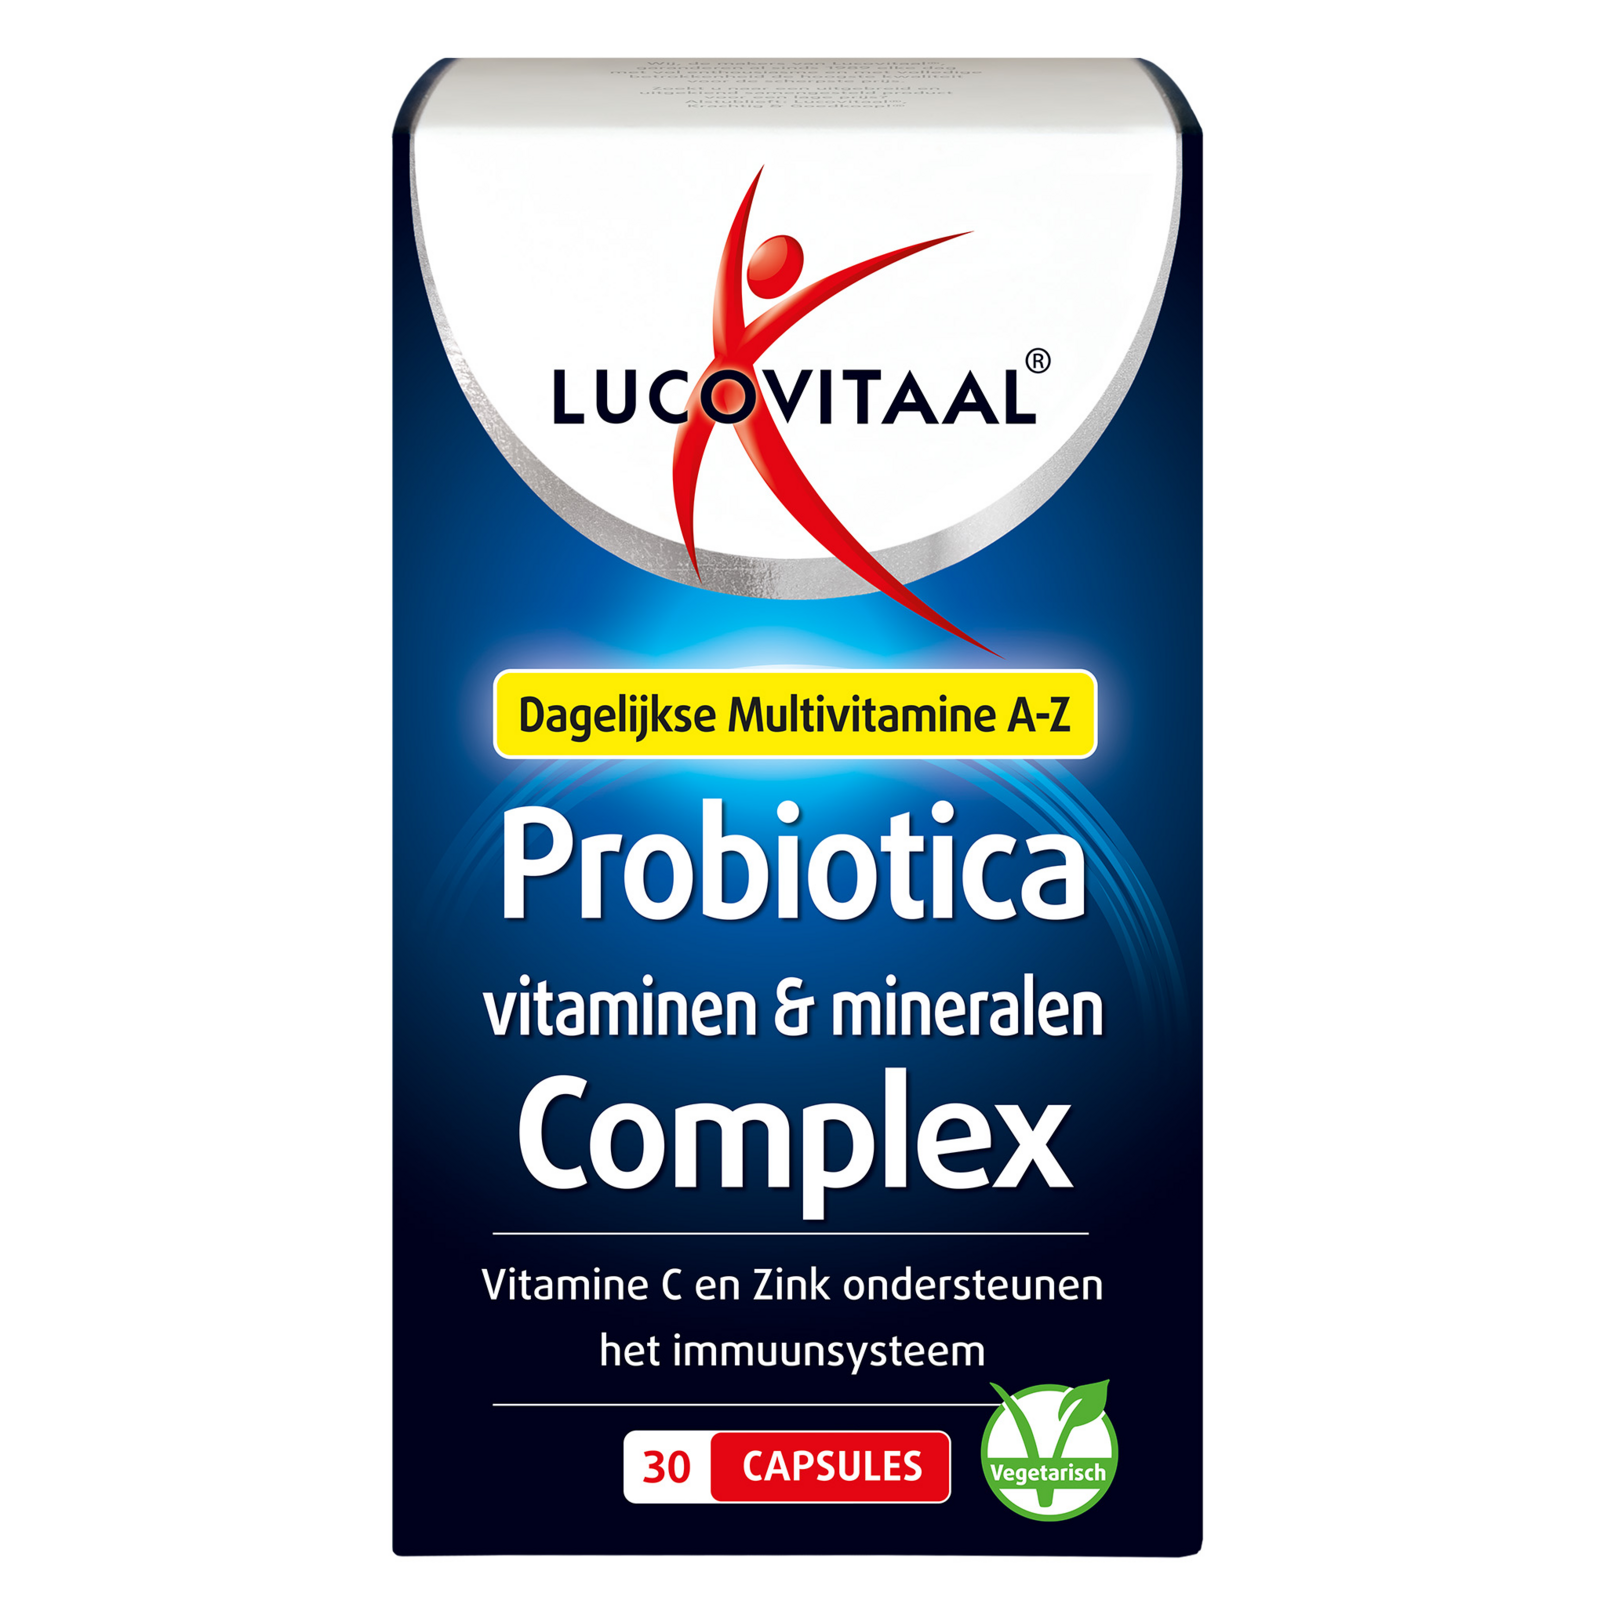 Lucovitaal Probiotica Vitaminen & Mineralen Complex Capsules